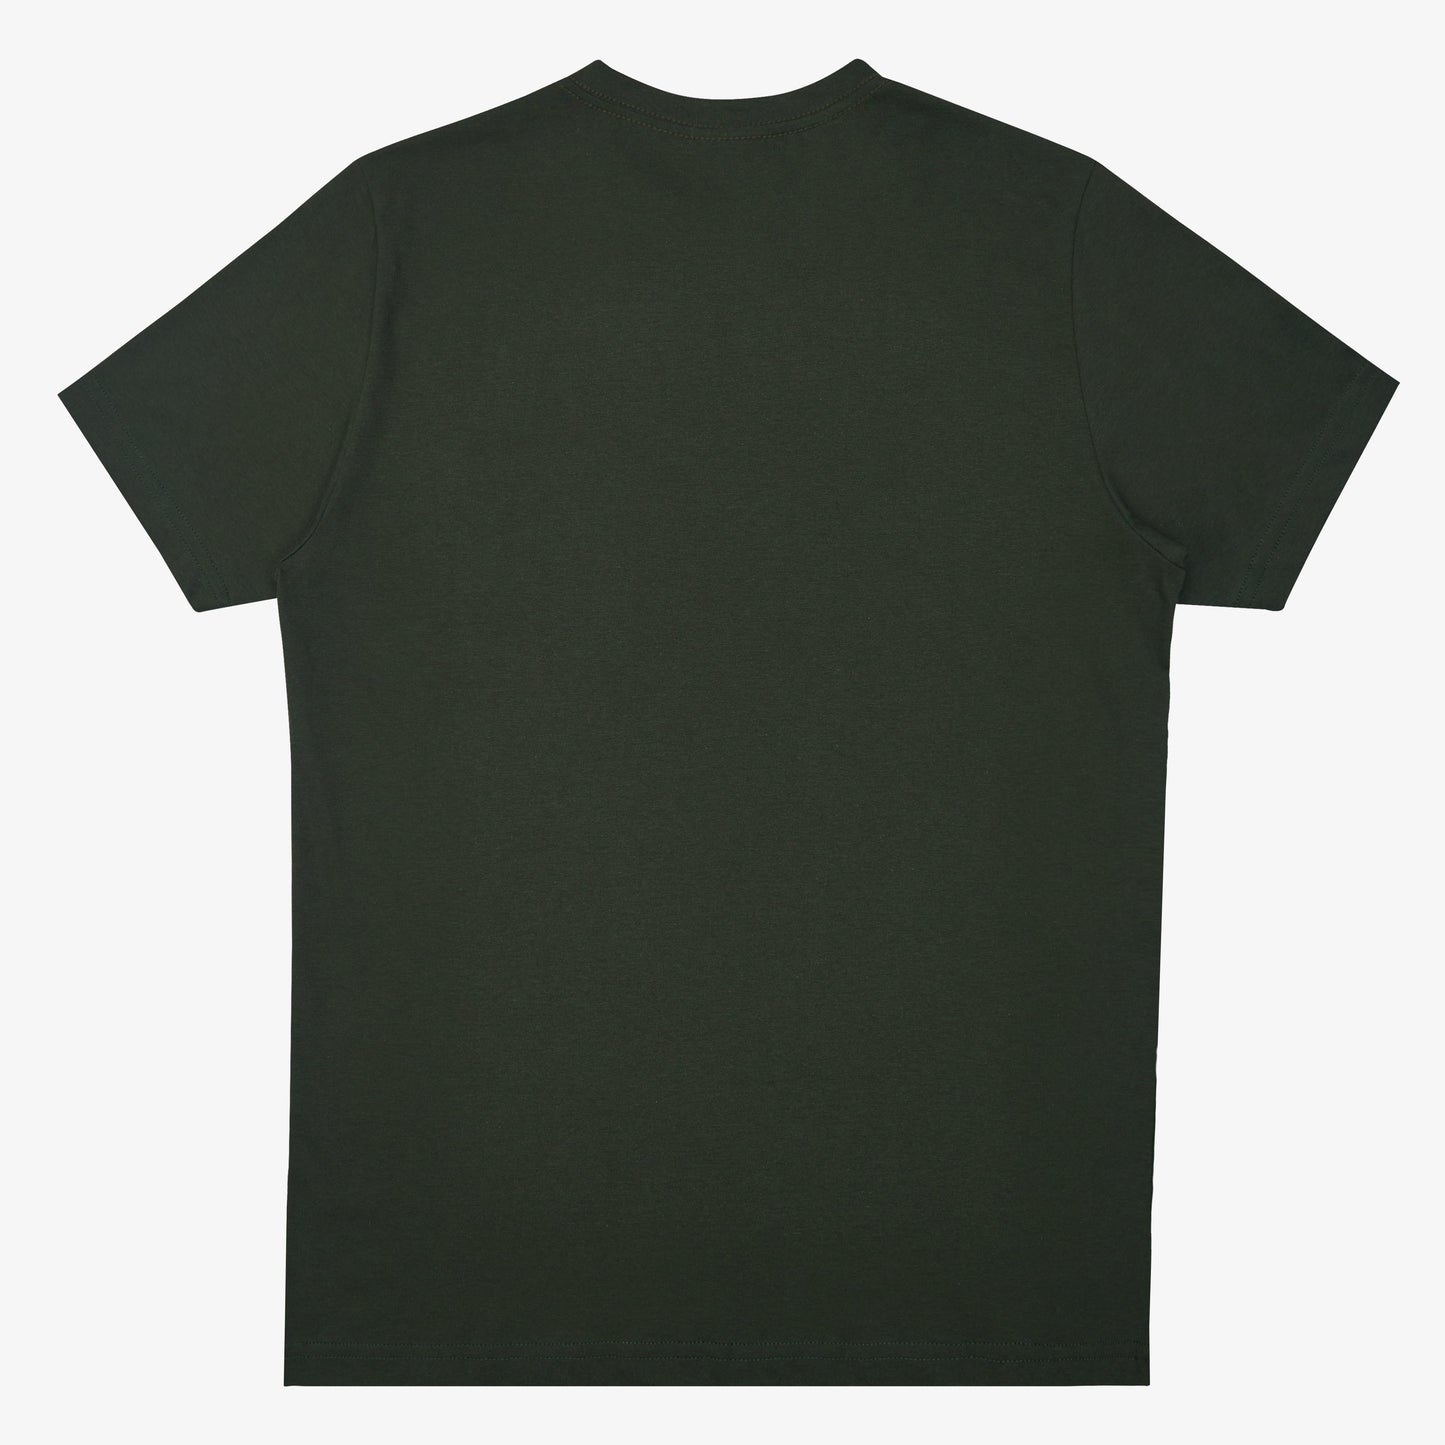 Latin Lover Basic Pocket Pine Green T-shirt